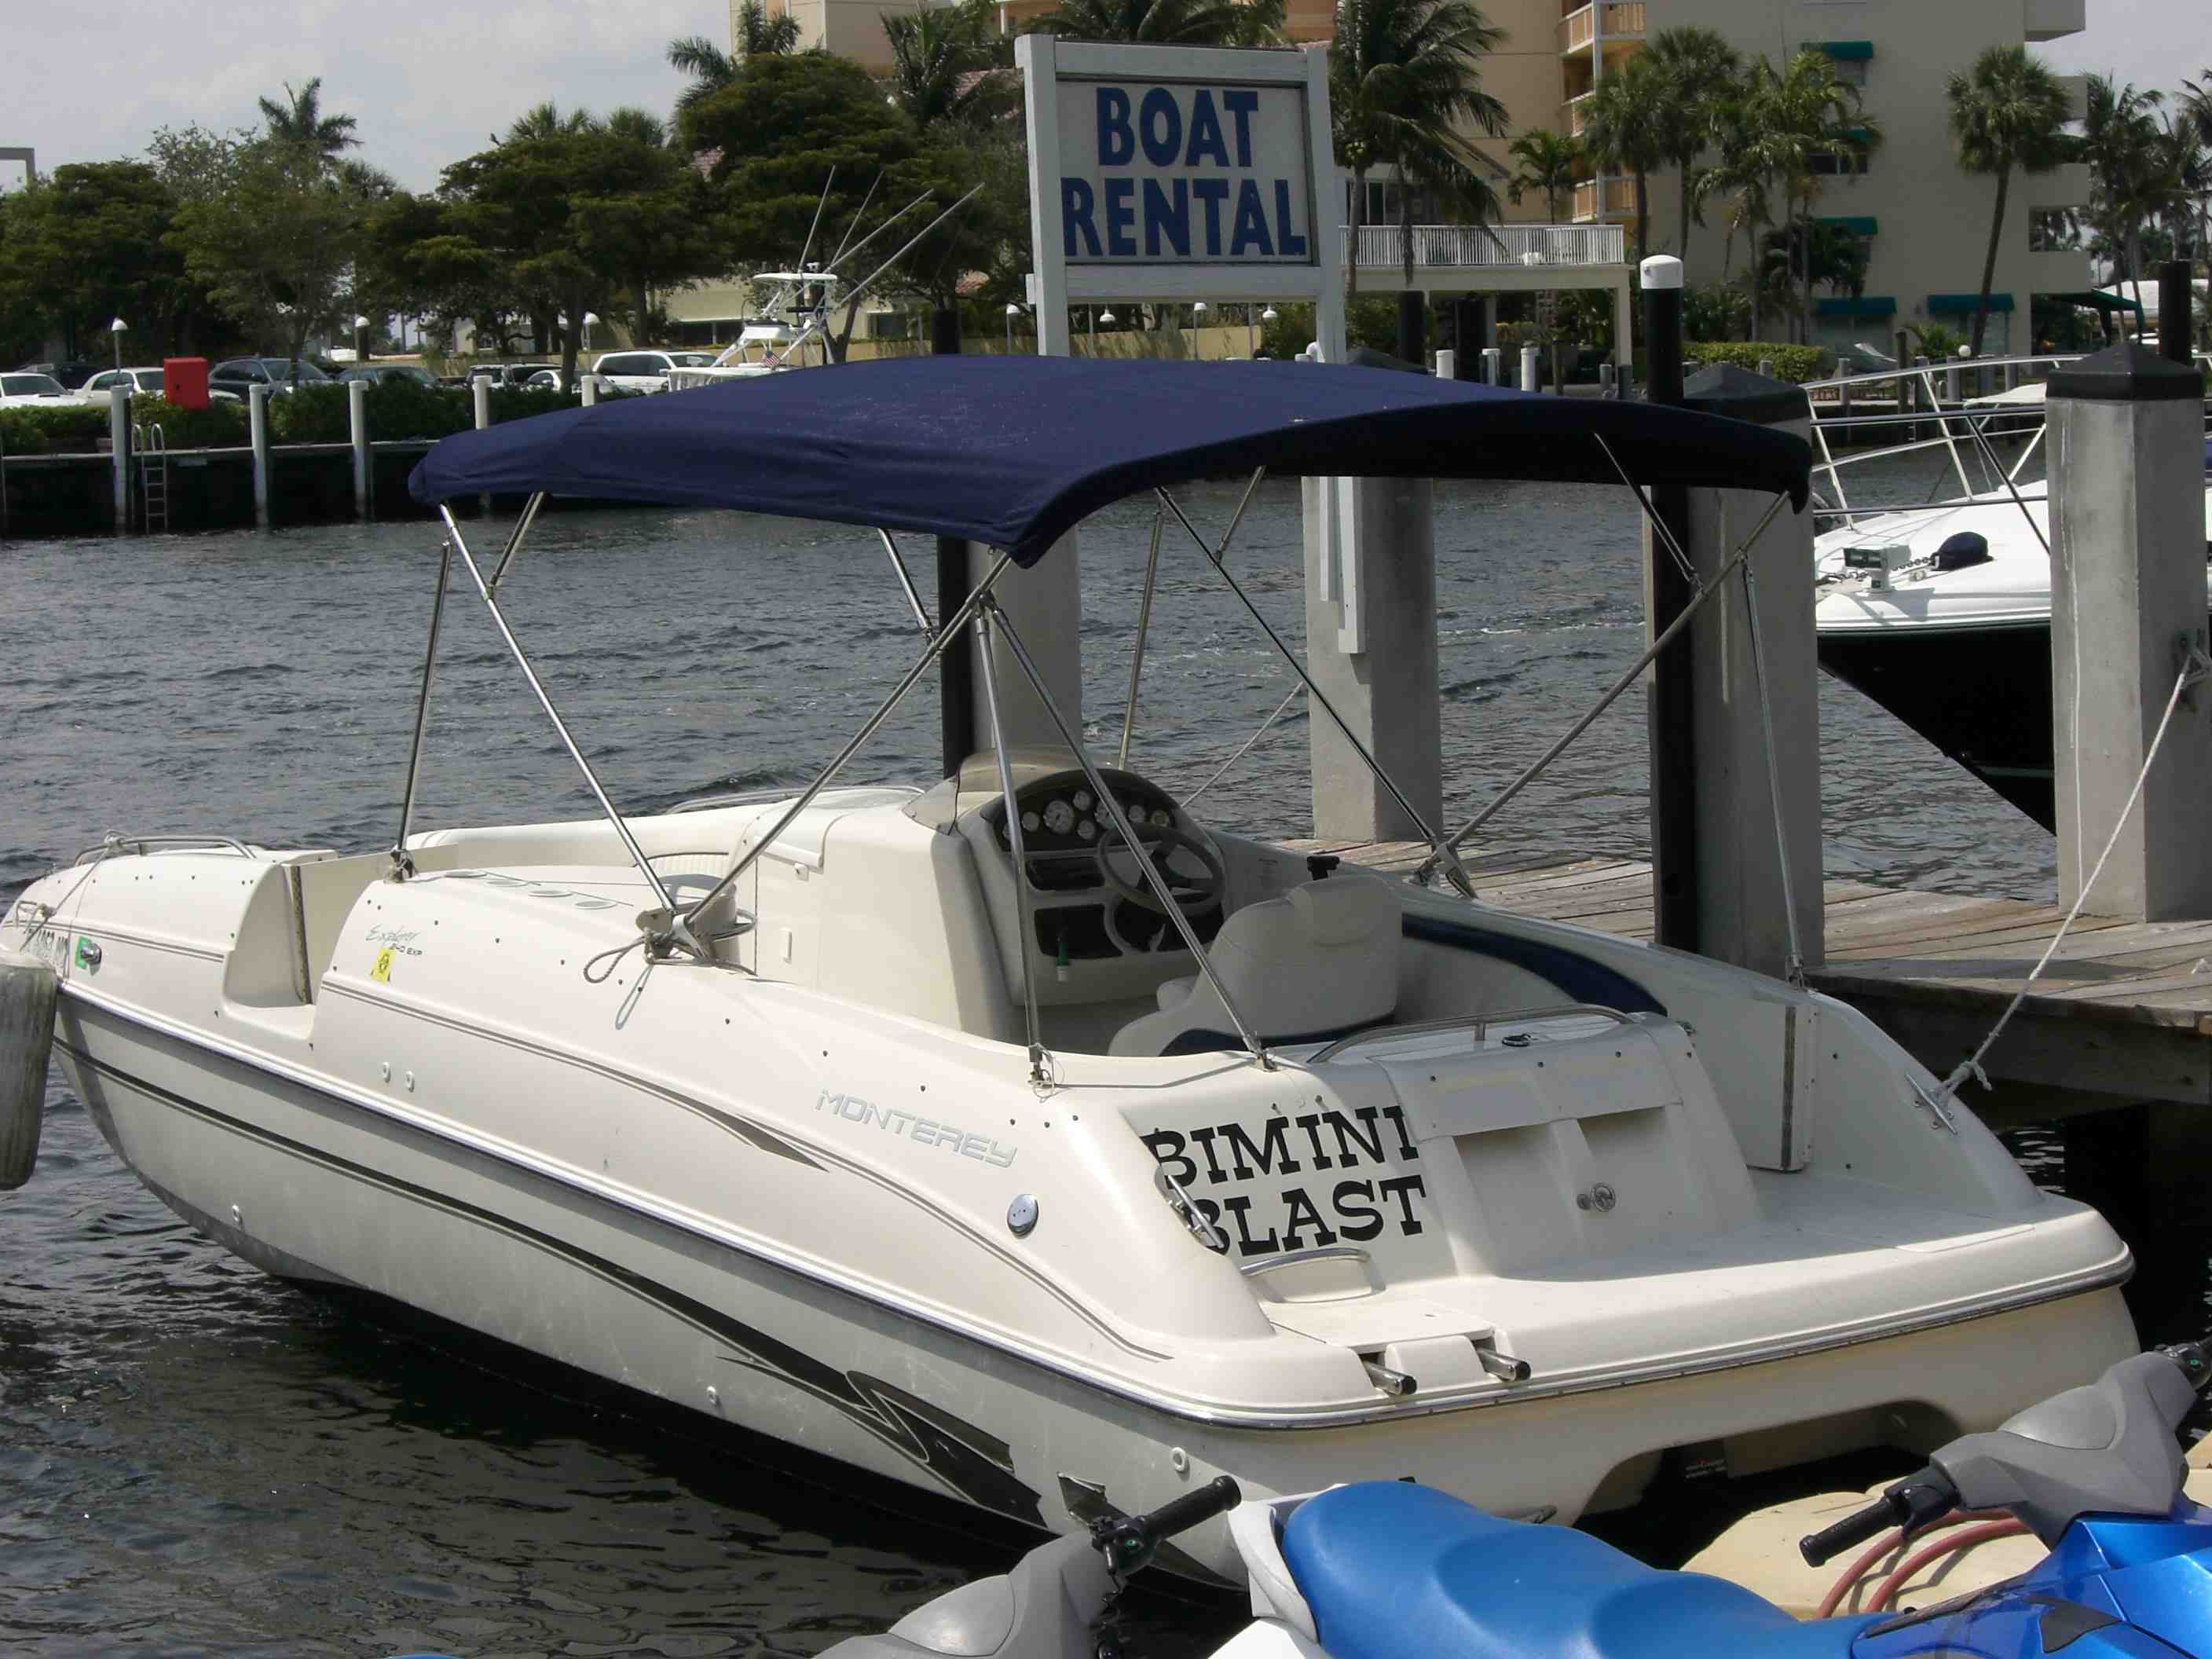  boat rentals Florida Fort Lauderdale Florida Atlantic Ocean/Intracoastal waterways South Florida Monterey 240 Deck Boat 0 24 Feet 